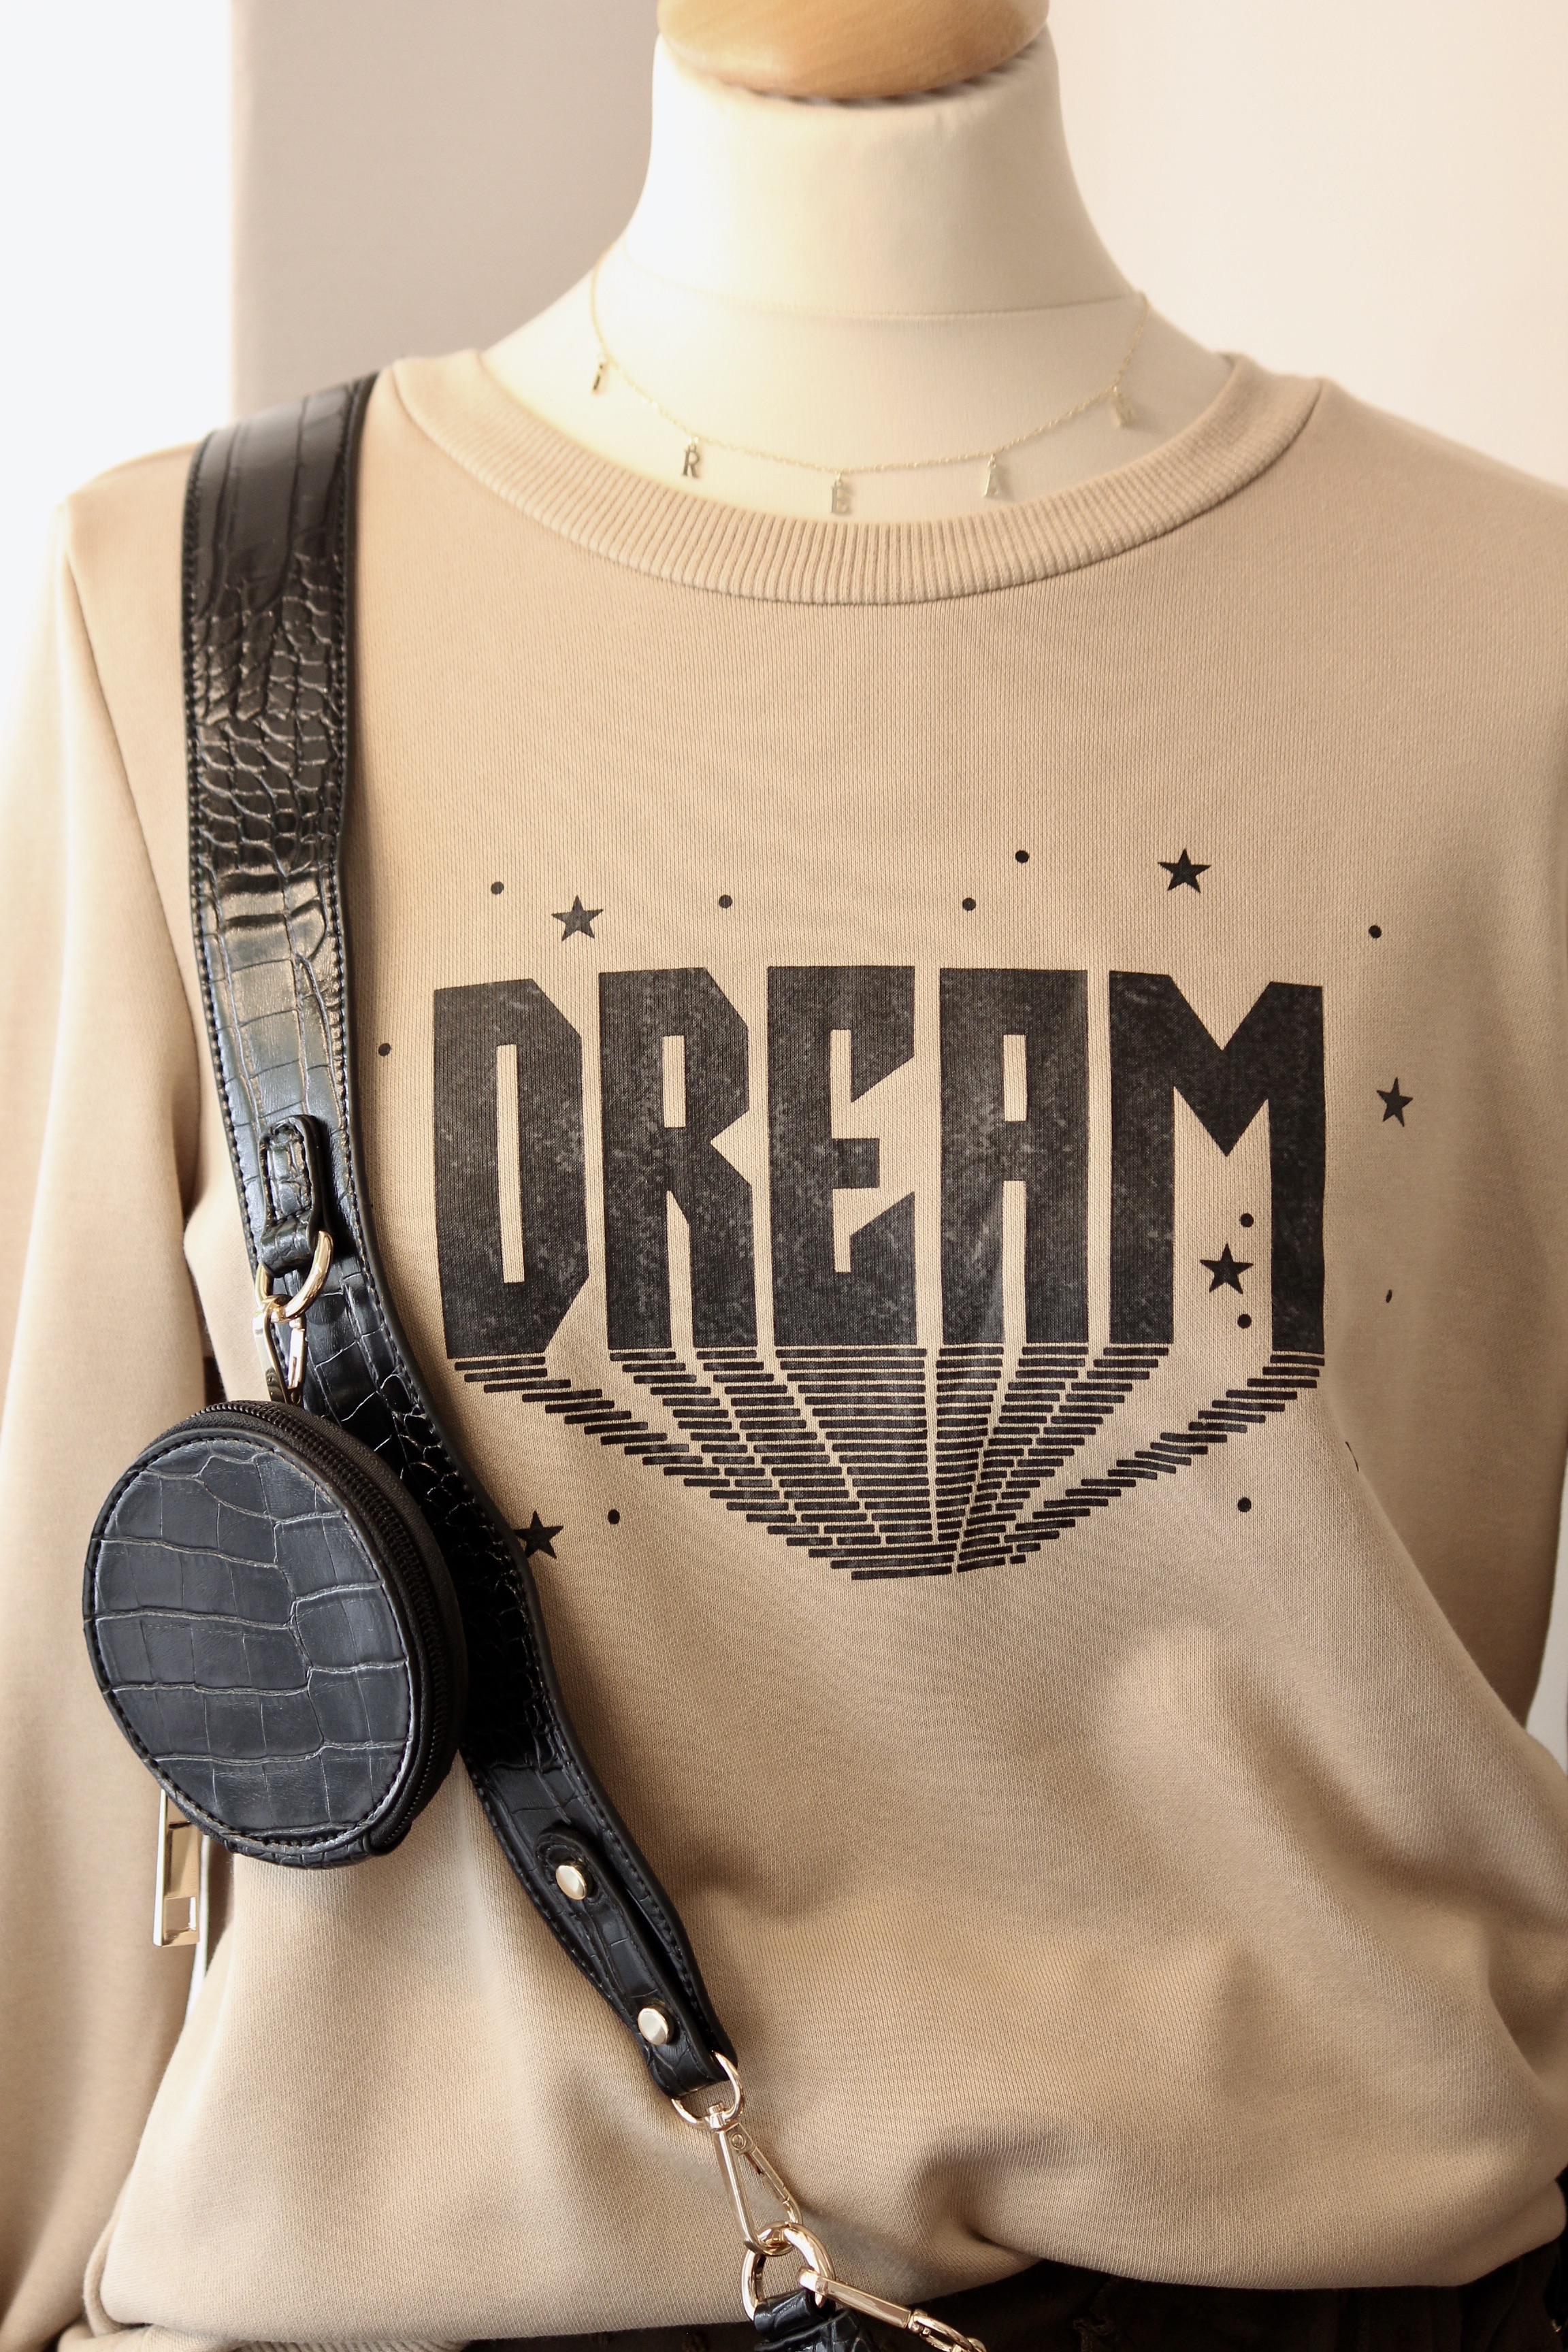 Sweatshirt "DREAM"